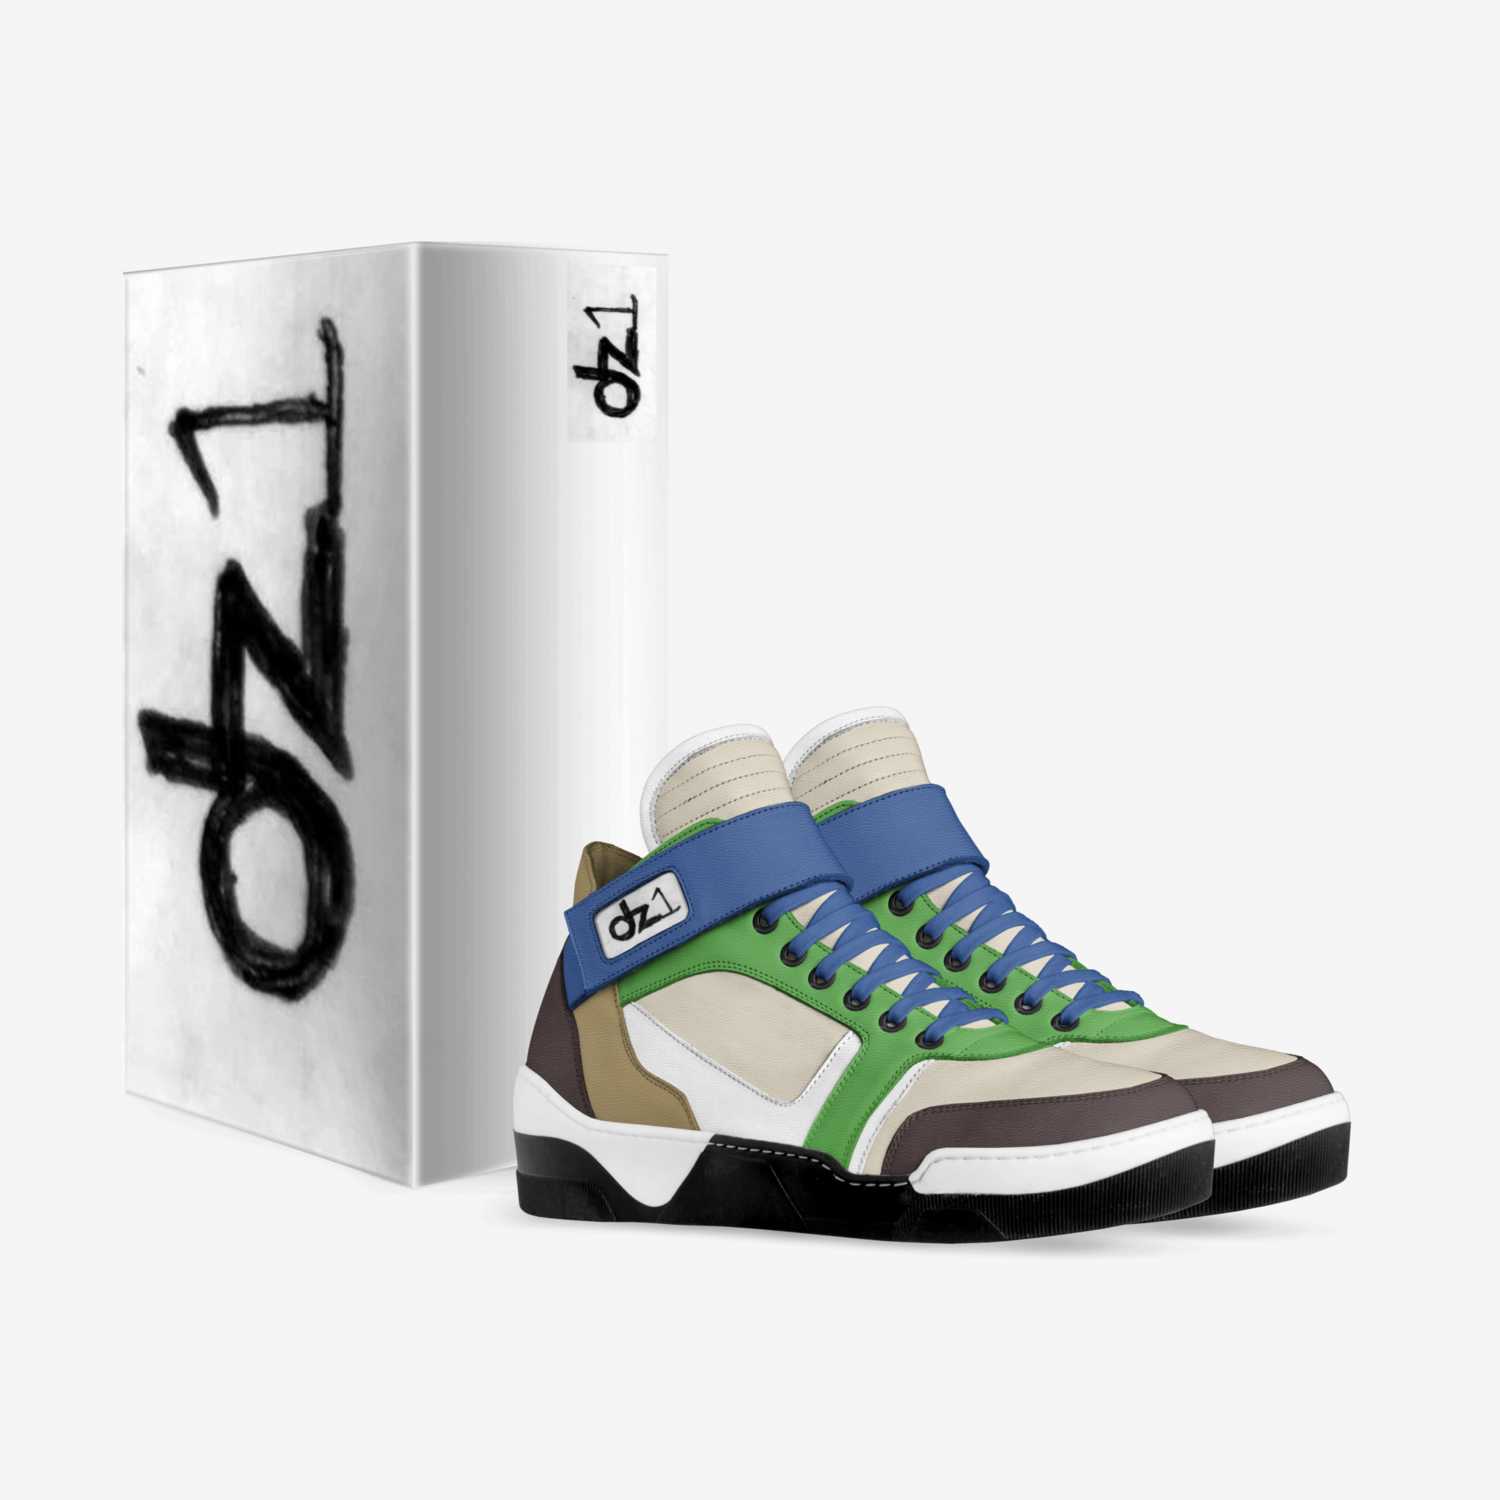 DZ1 custom made in Italy shoes by Garrett K | Box view